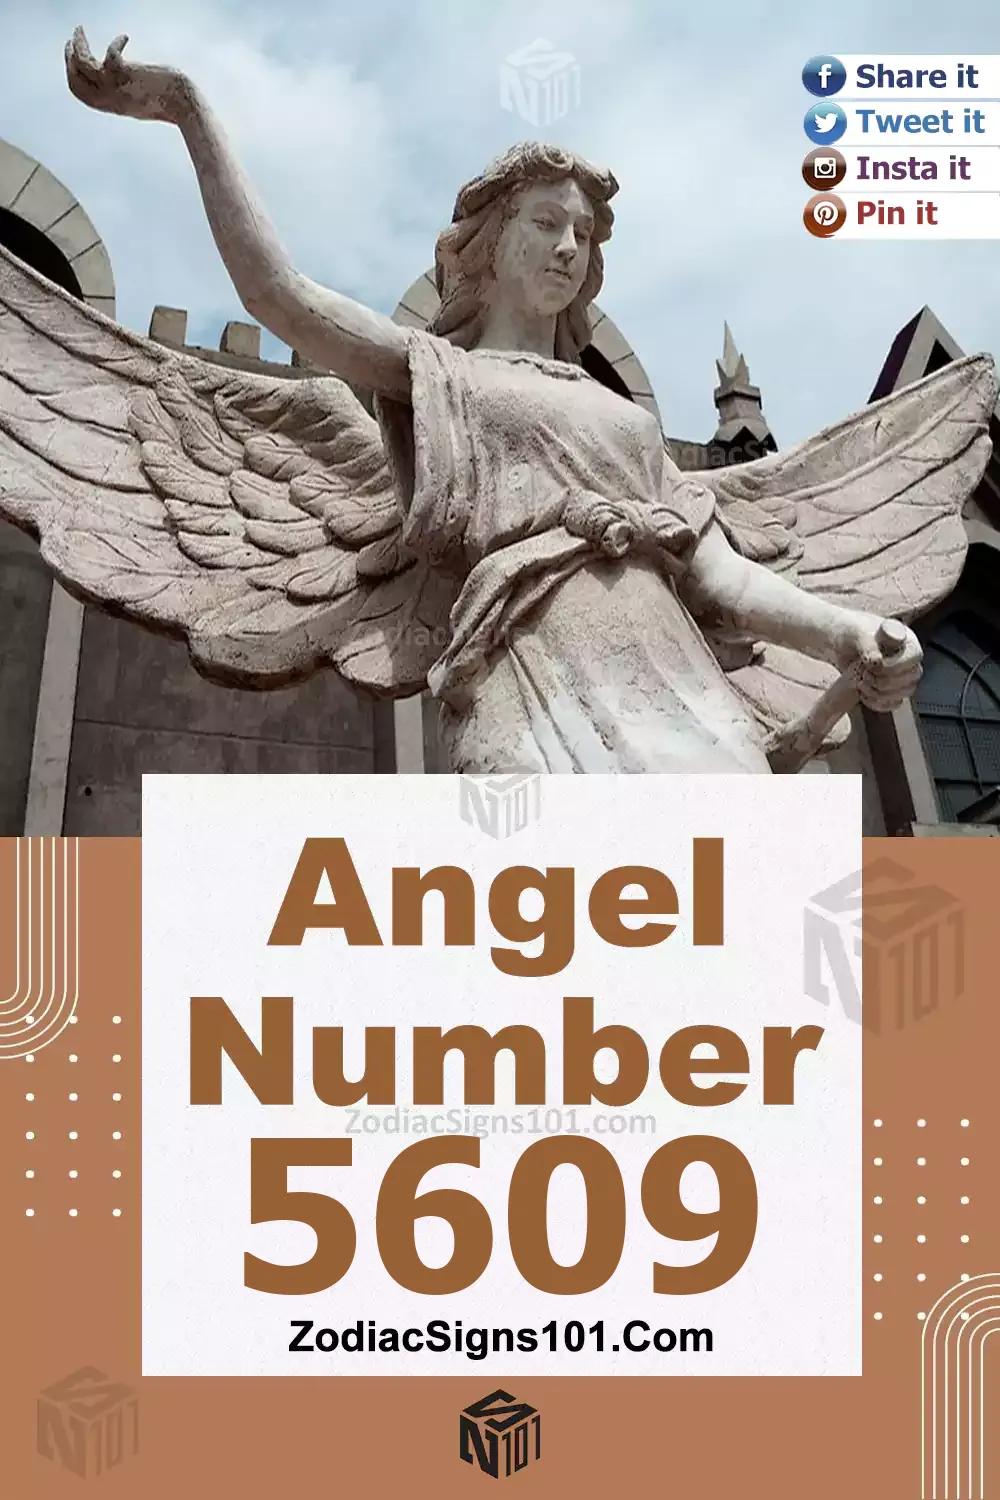 5609-Angel-Number-Meaning.jpg